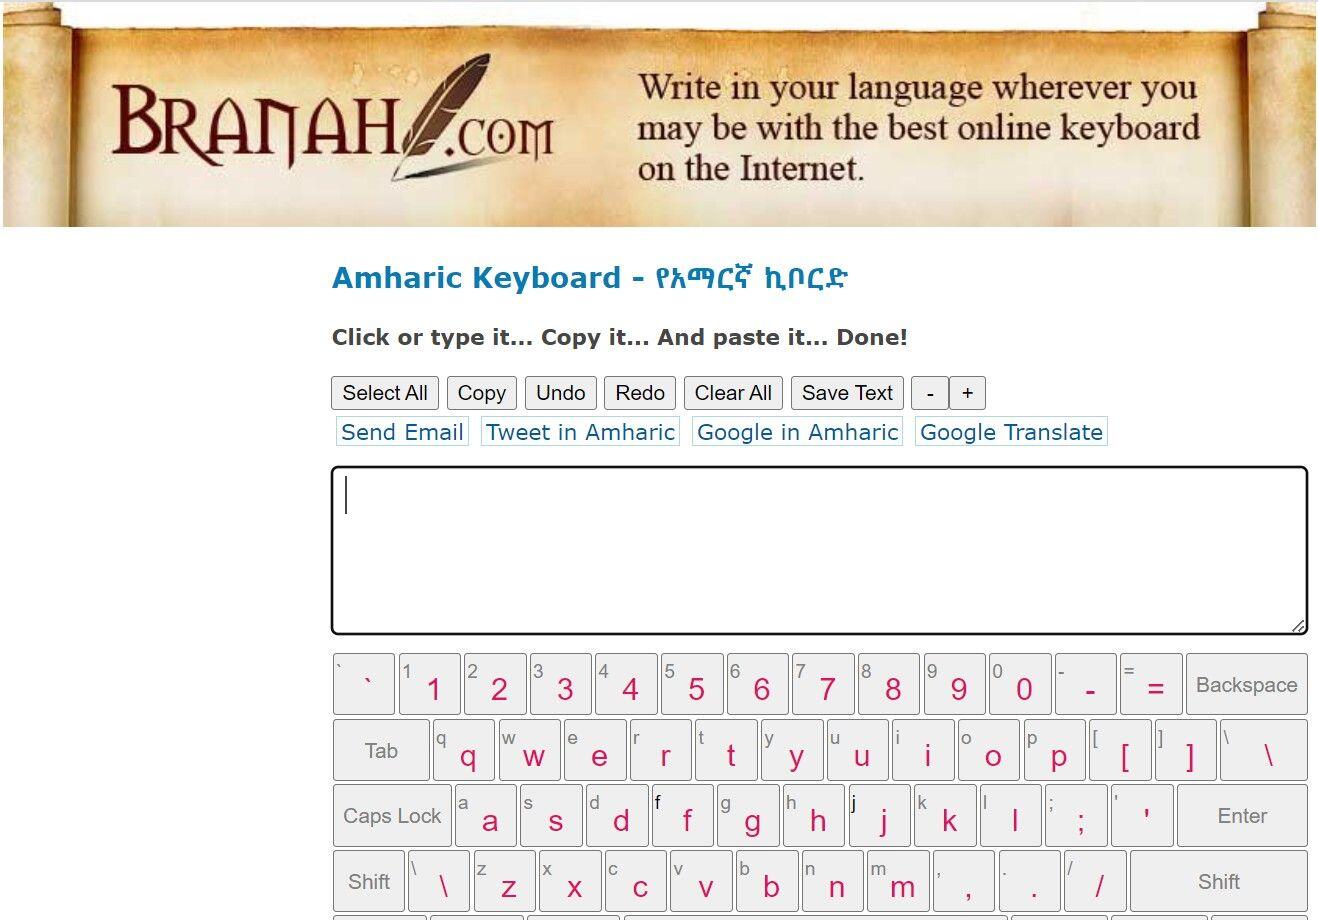 Branah Amharic Keyboard